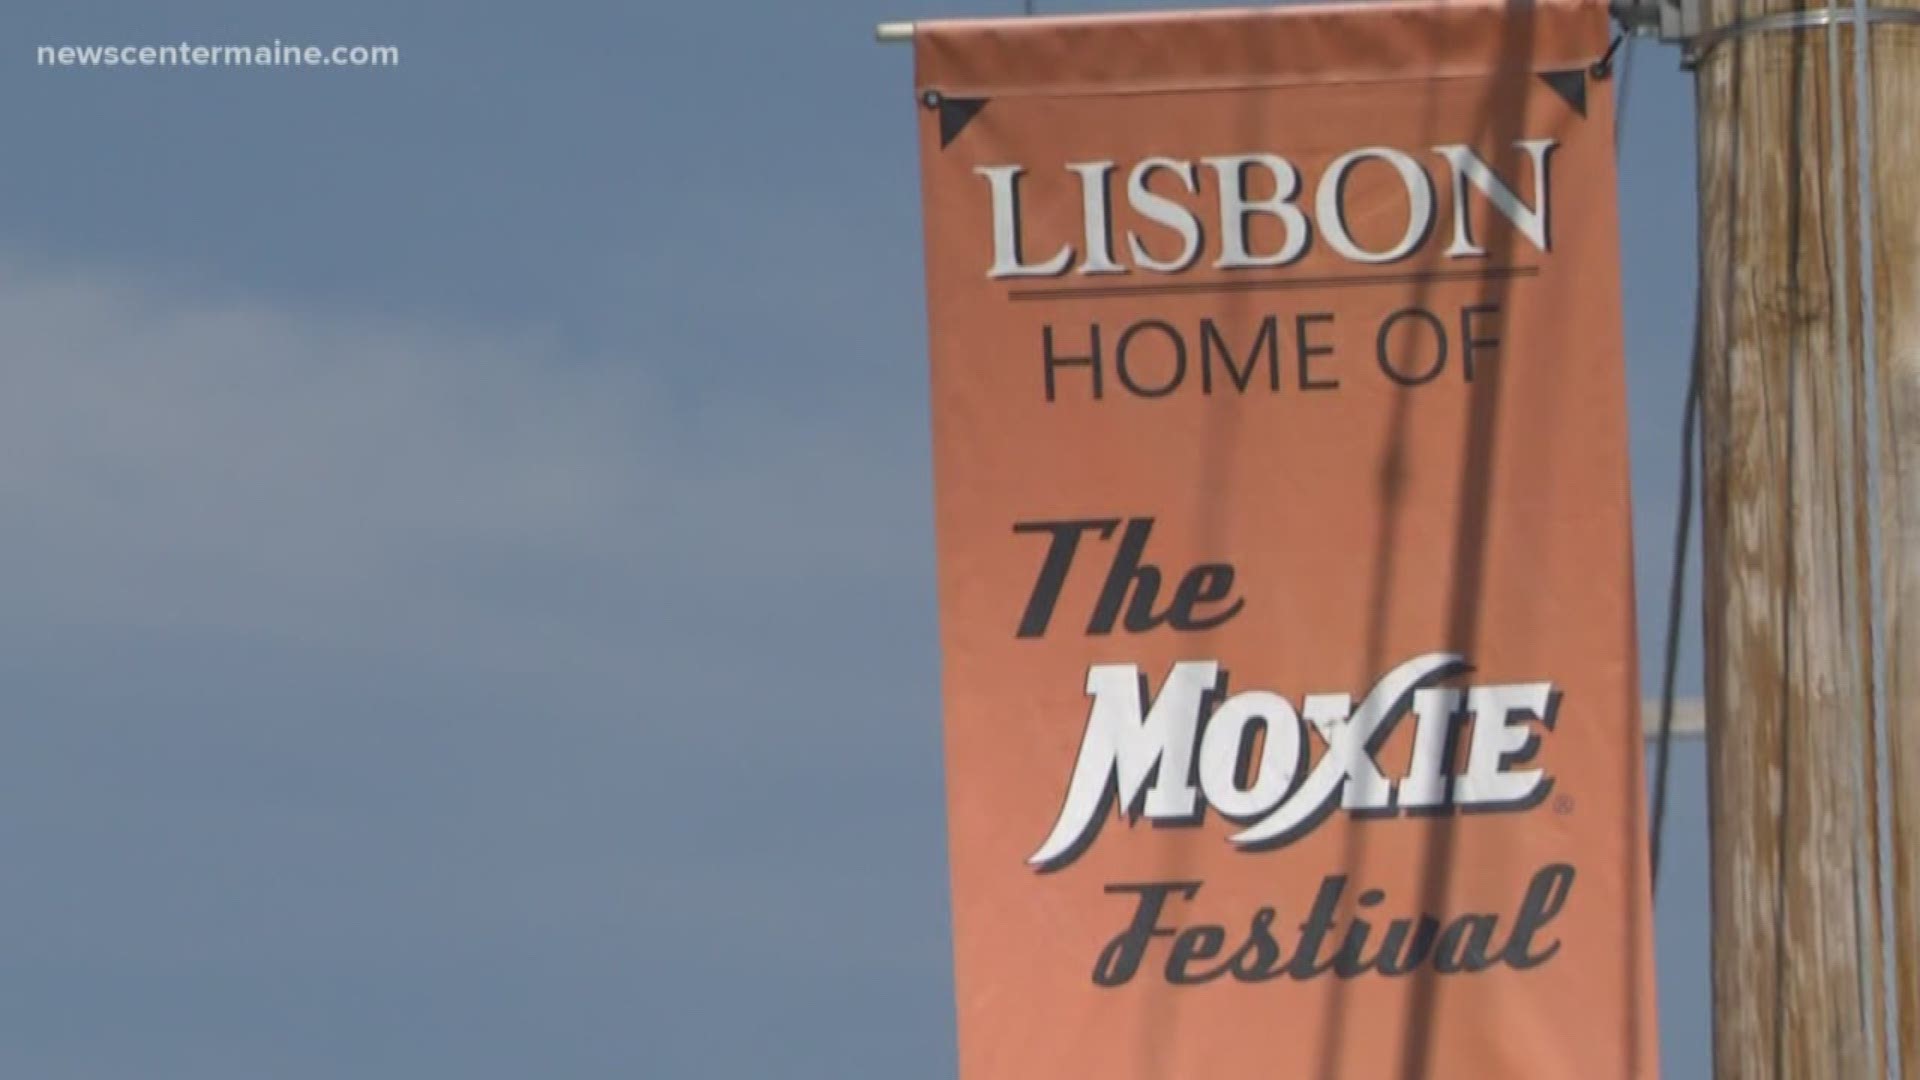 Moxie Festival, Distinctively Different